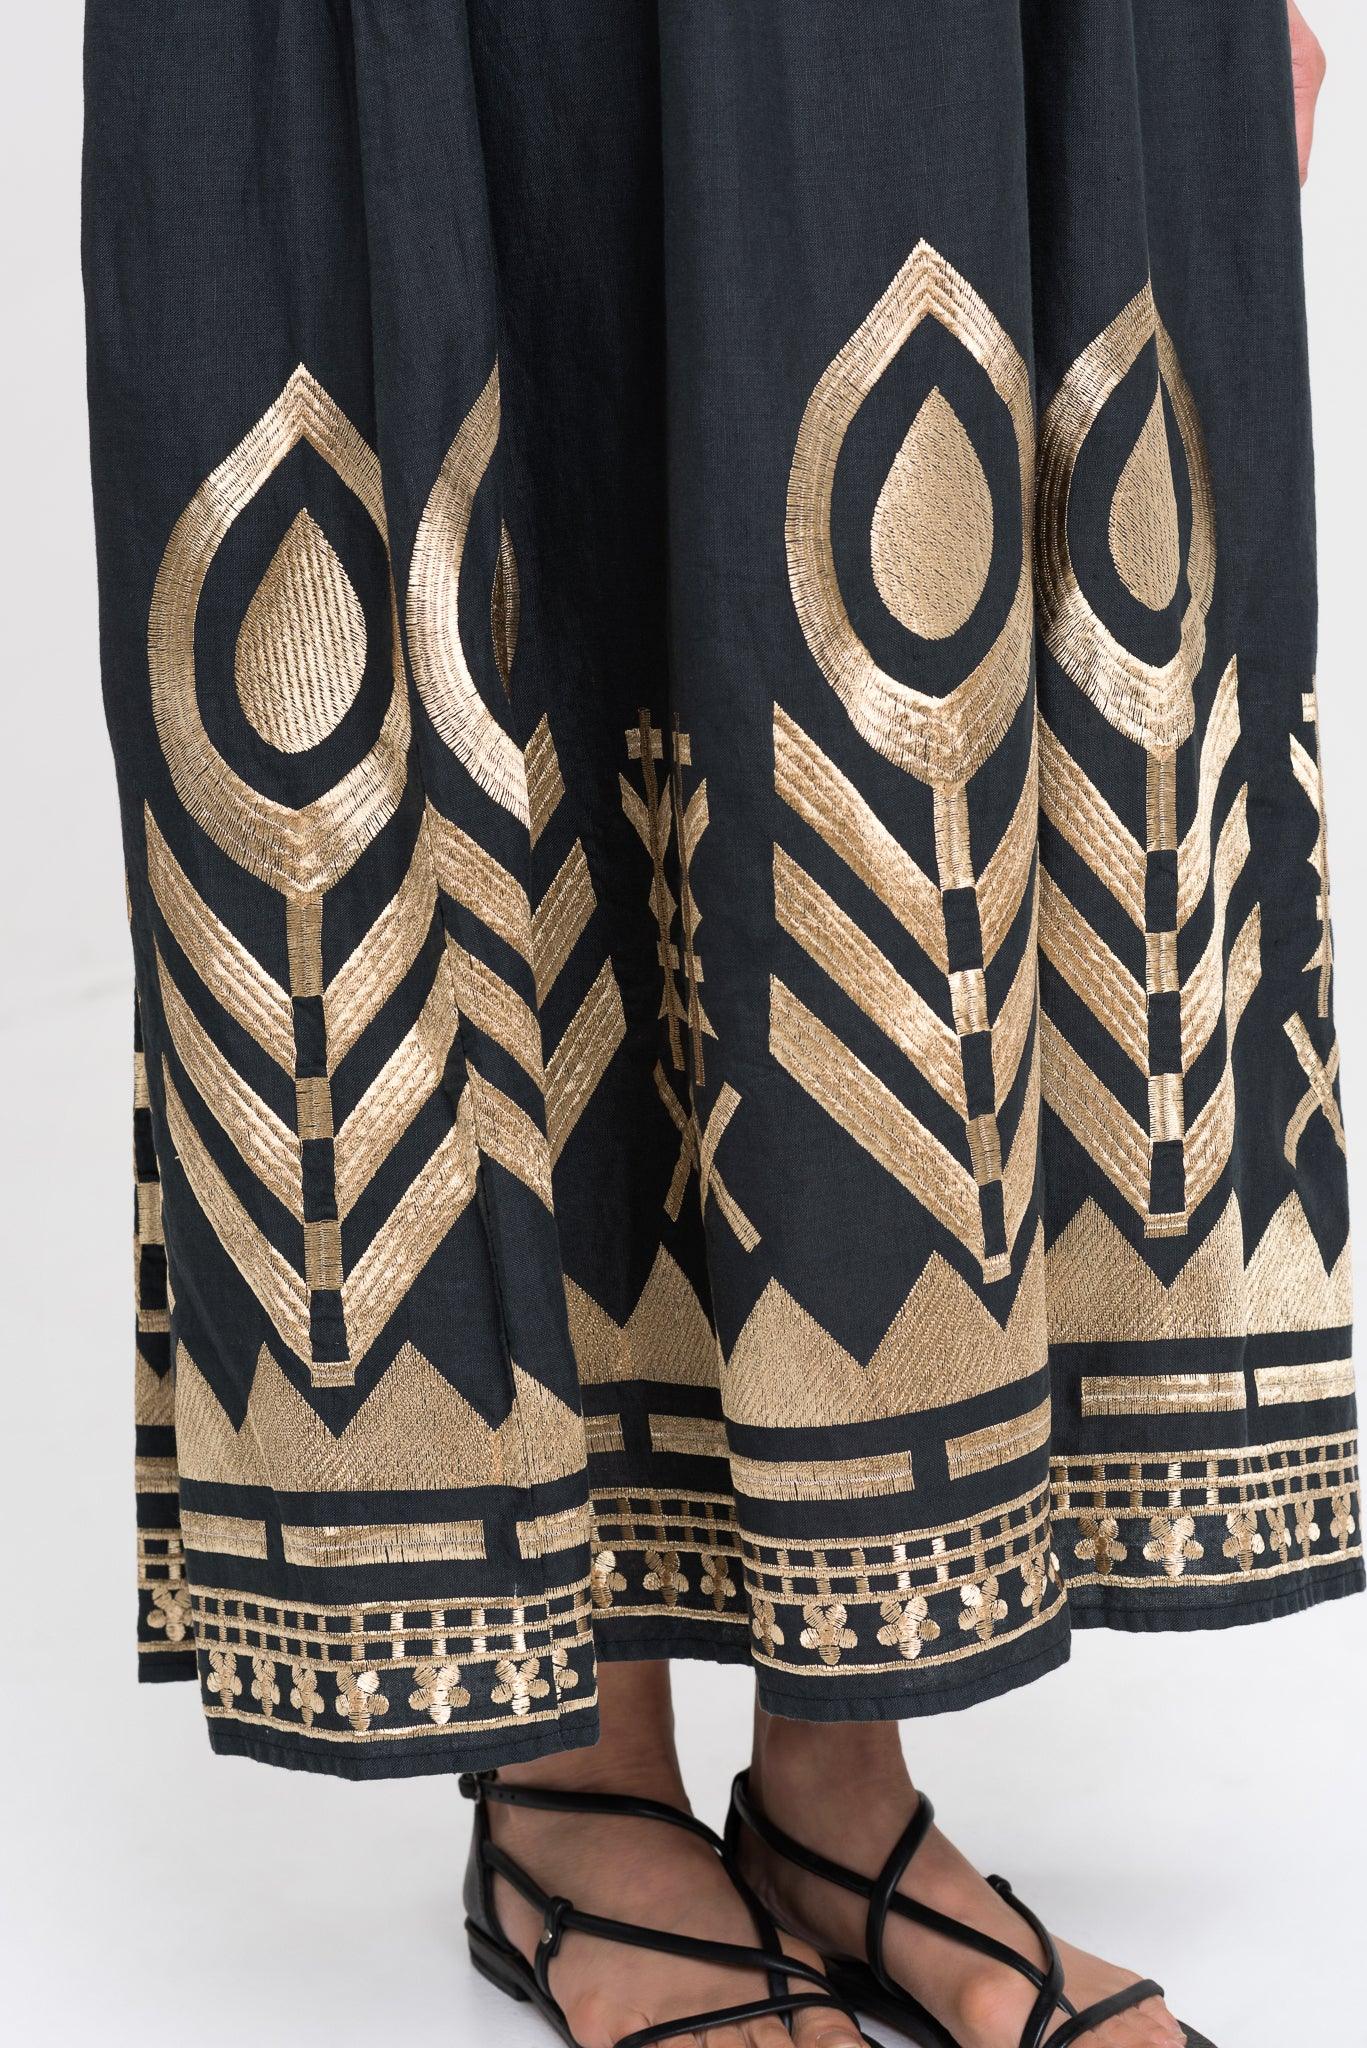 GREEK ARCHAIC KORI | Long linen Dress, Bell Sleeves Charcoal & Gold - Pasha Living 